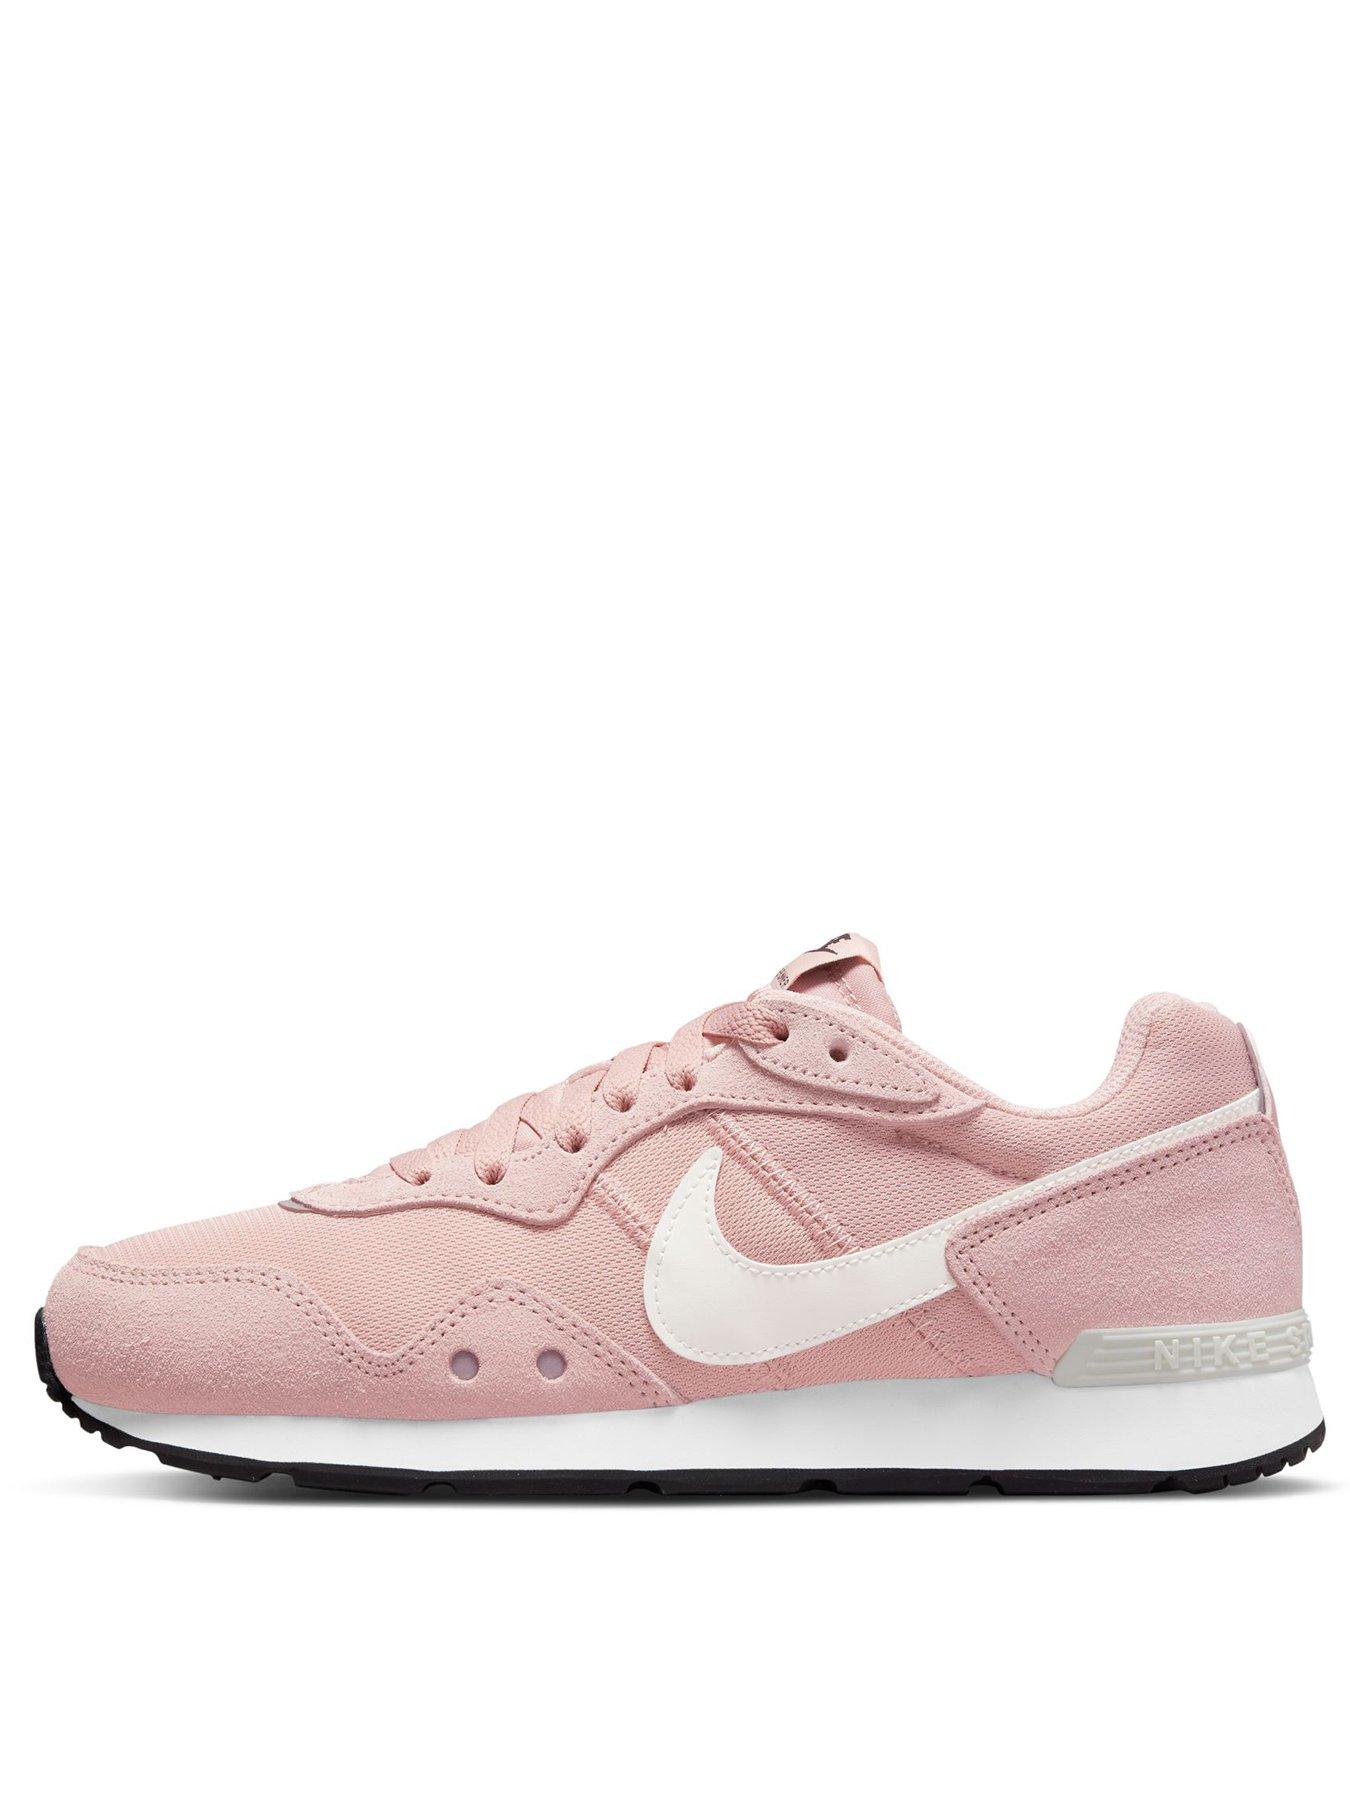 Nike Venture Runner - Pink/White | very.co.uk